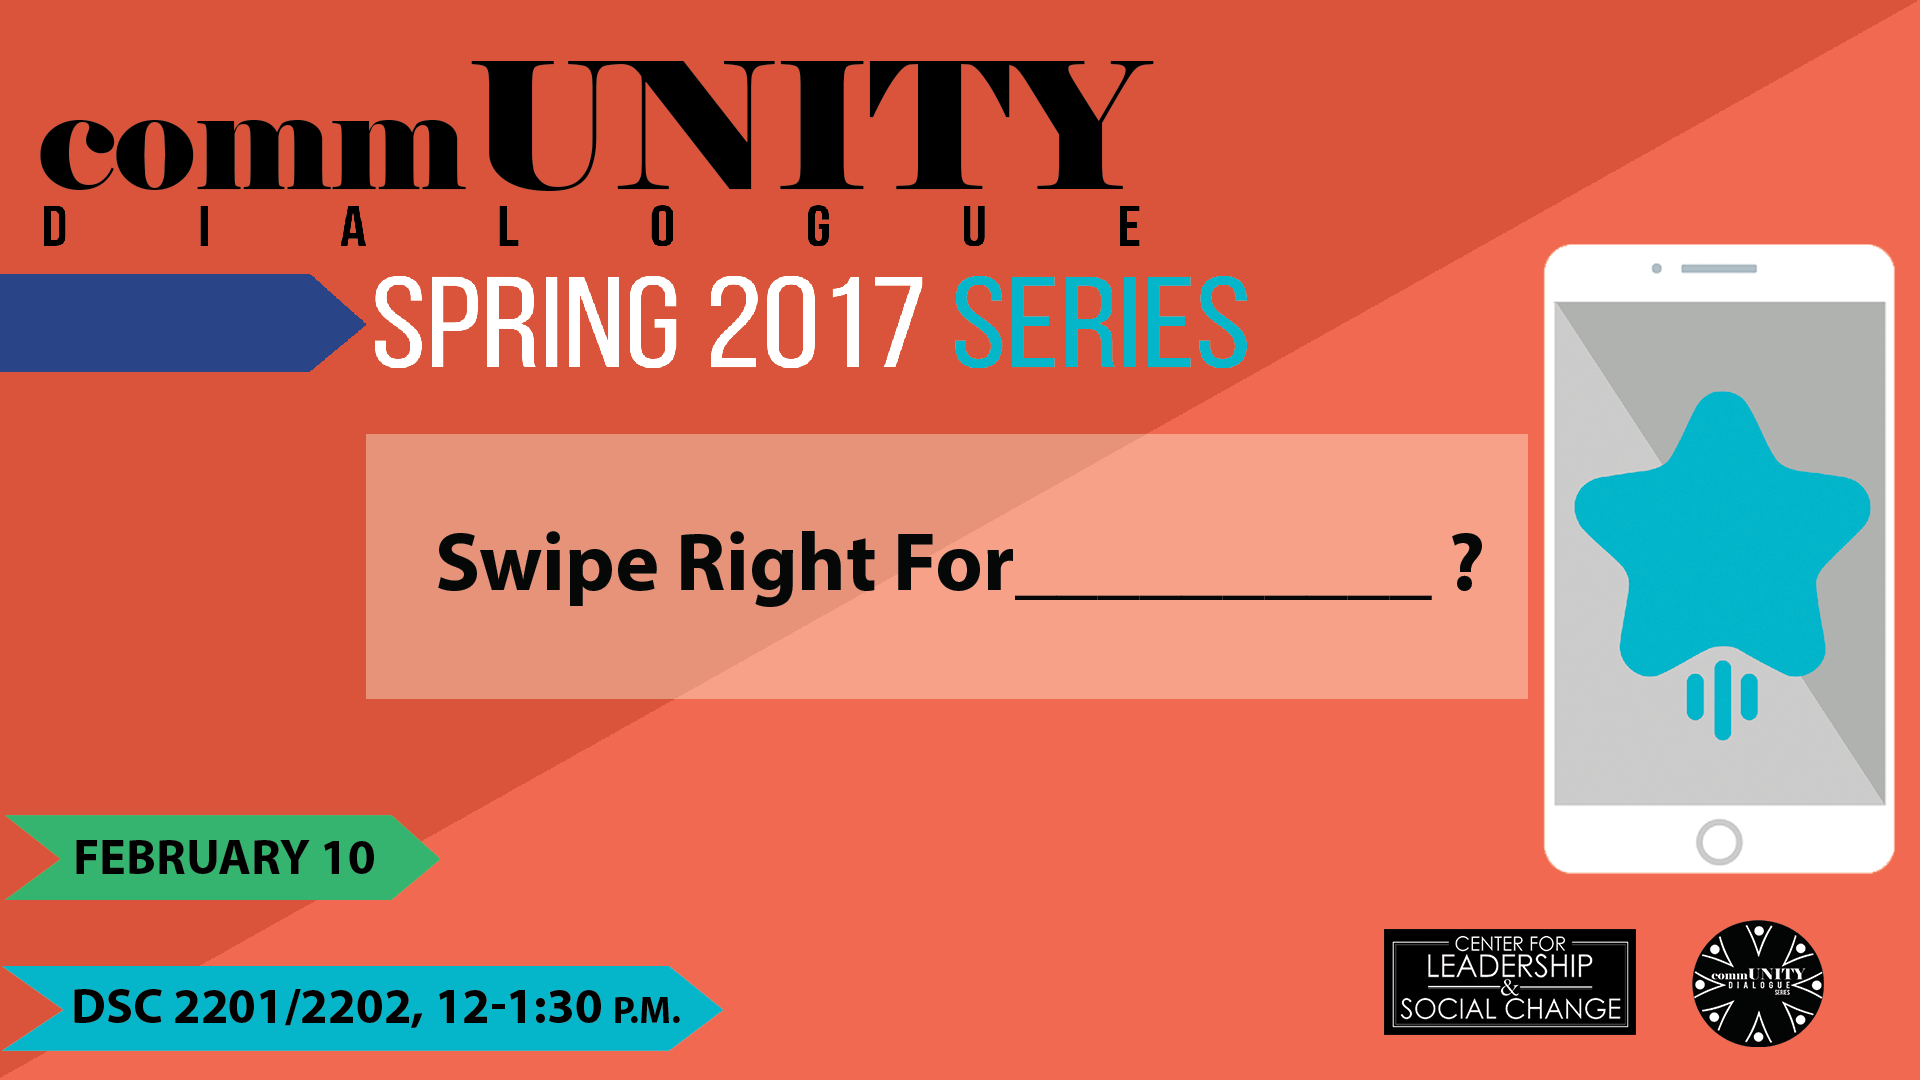 CommUNITY Dialogue: Swipe Right For _?, February 10, DSC 2201/2202 (12-1:30 p.m.)